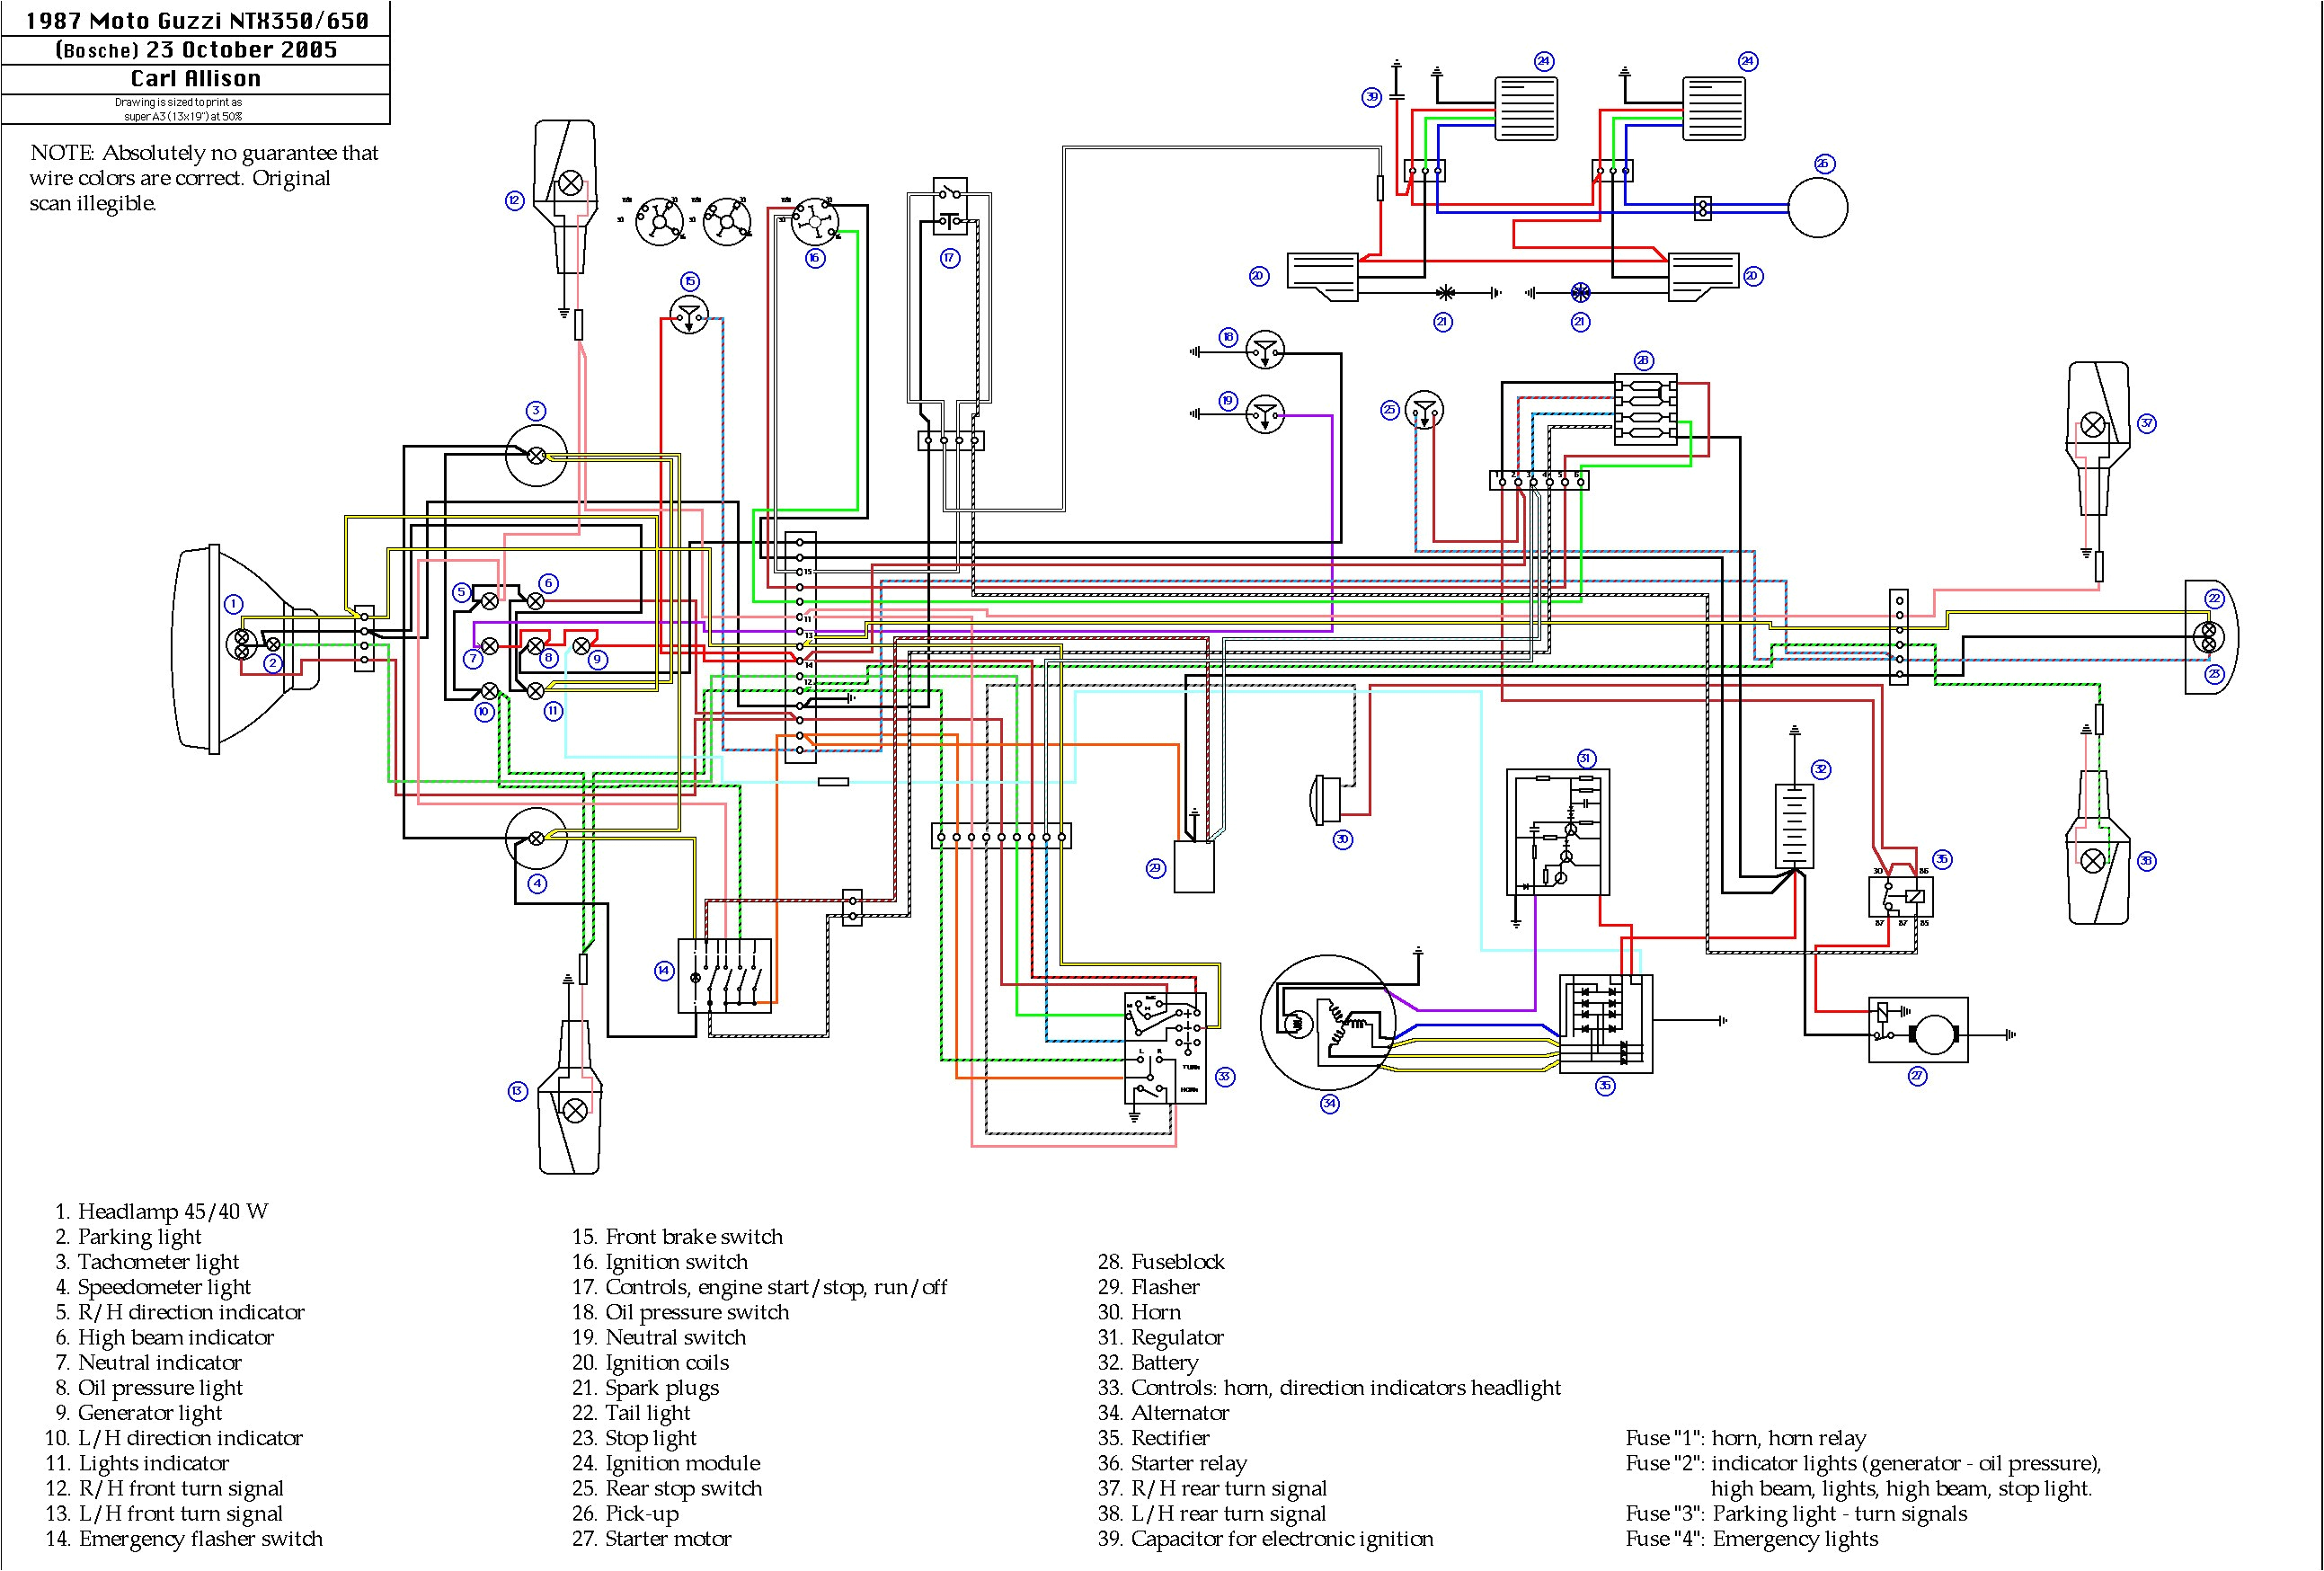 wiring diagram likewise on yamaha wolverine atv winch solenoid